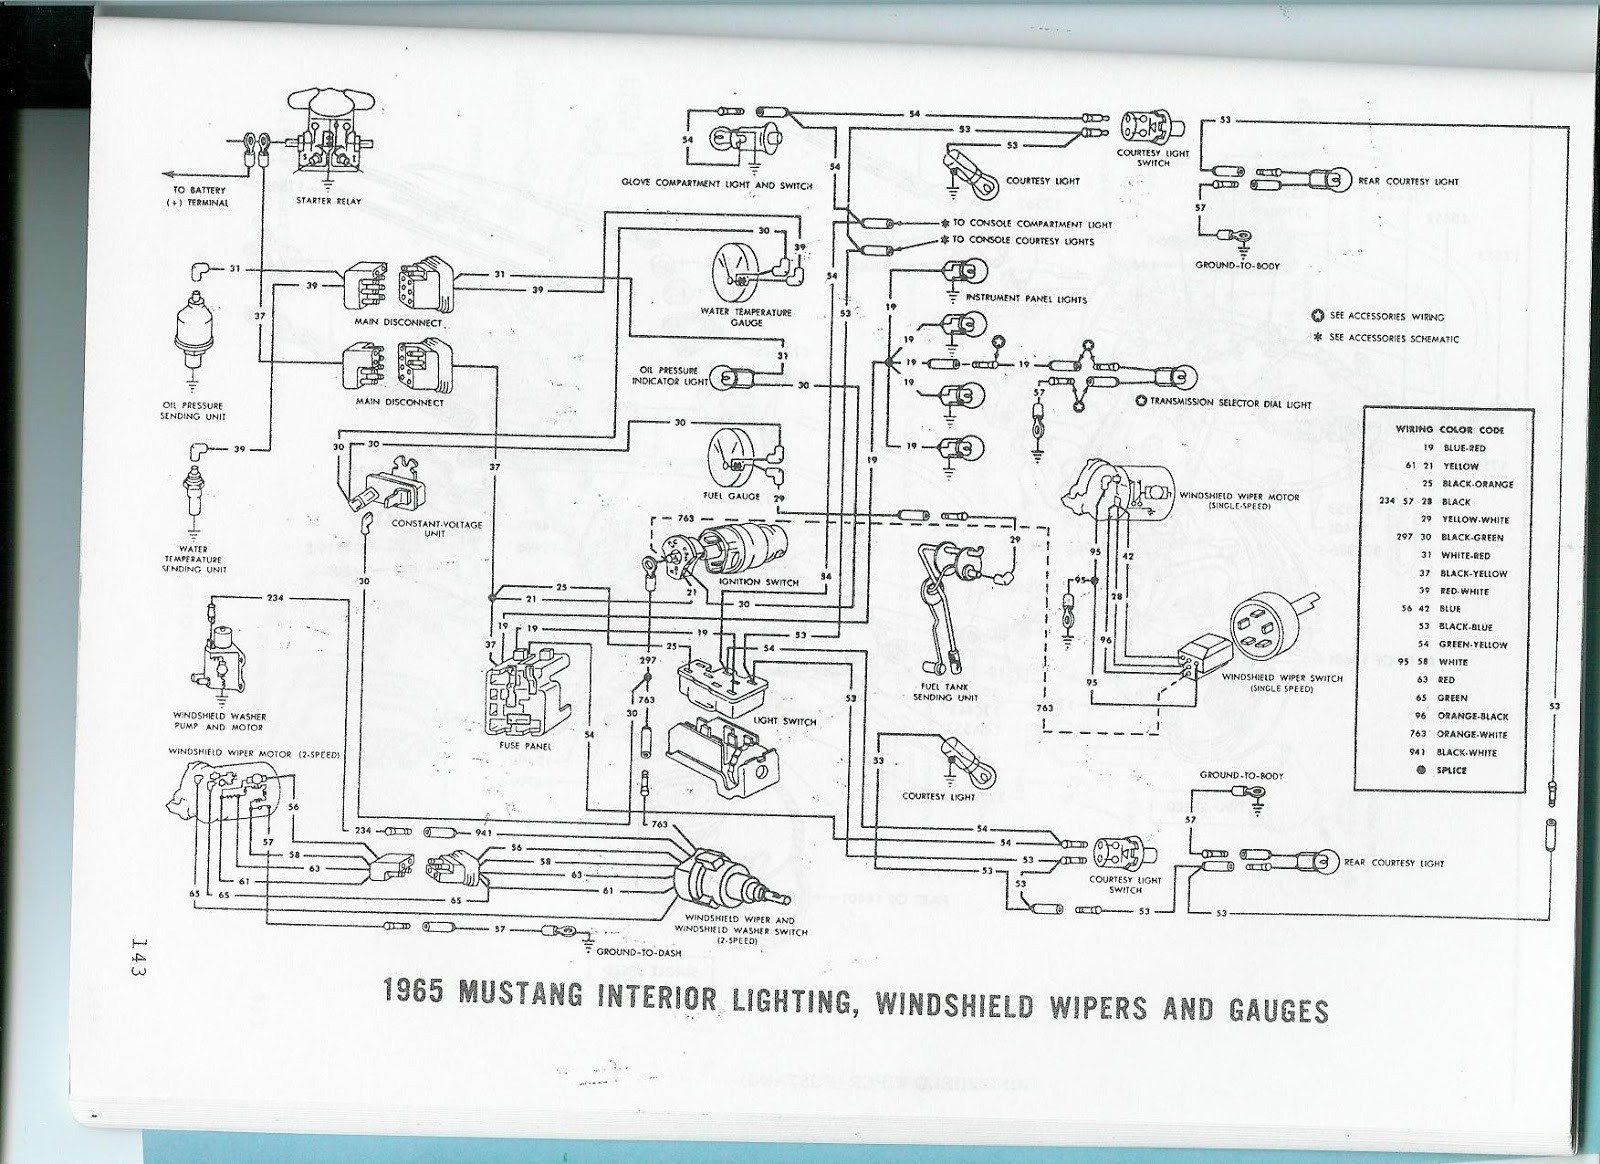 1965 Mustang Wiring Diagram Inspirational 1965 Mustang Wiring Diagrams Average Joe Restoration Beautiful